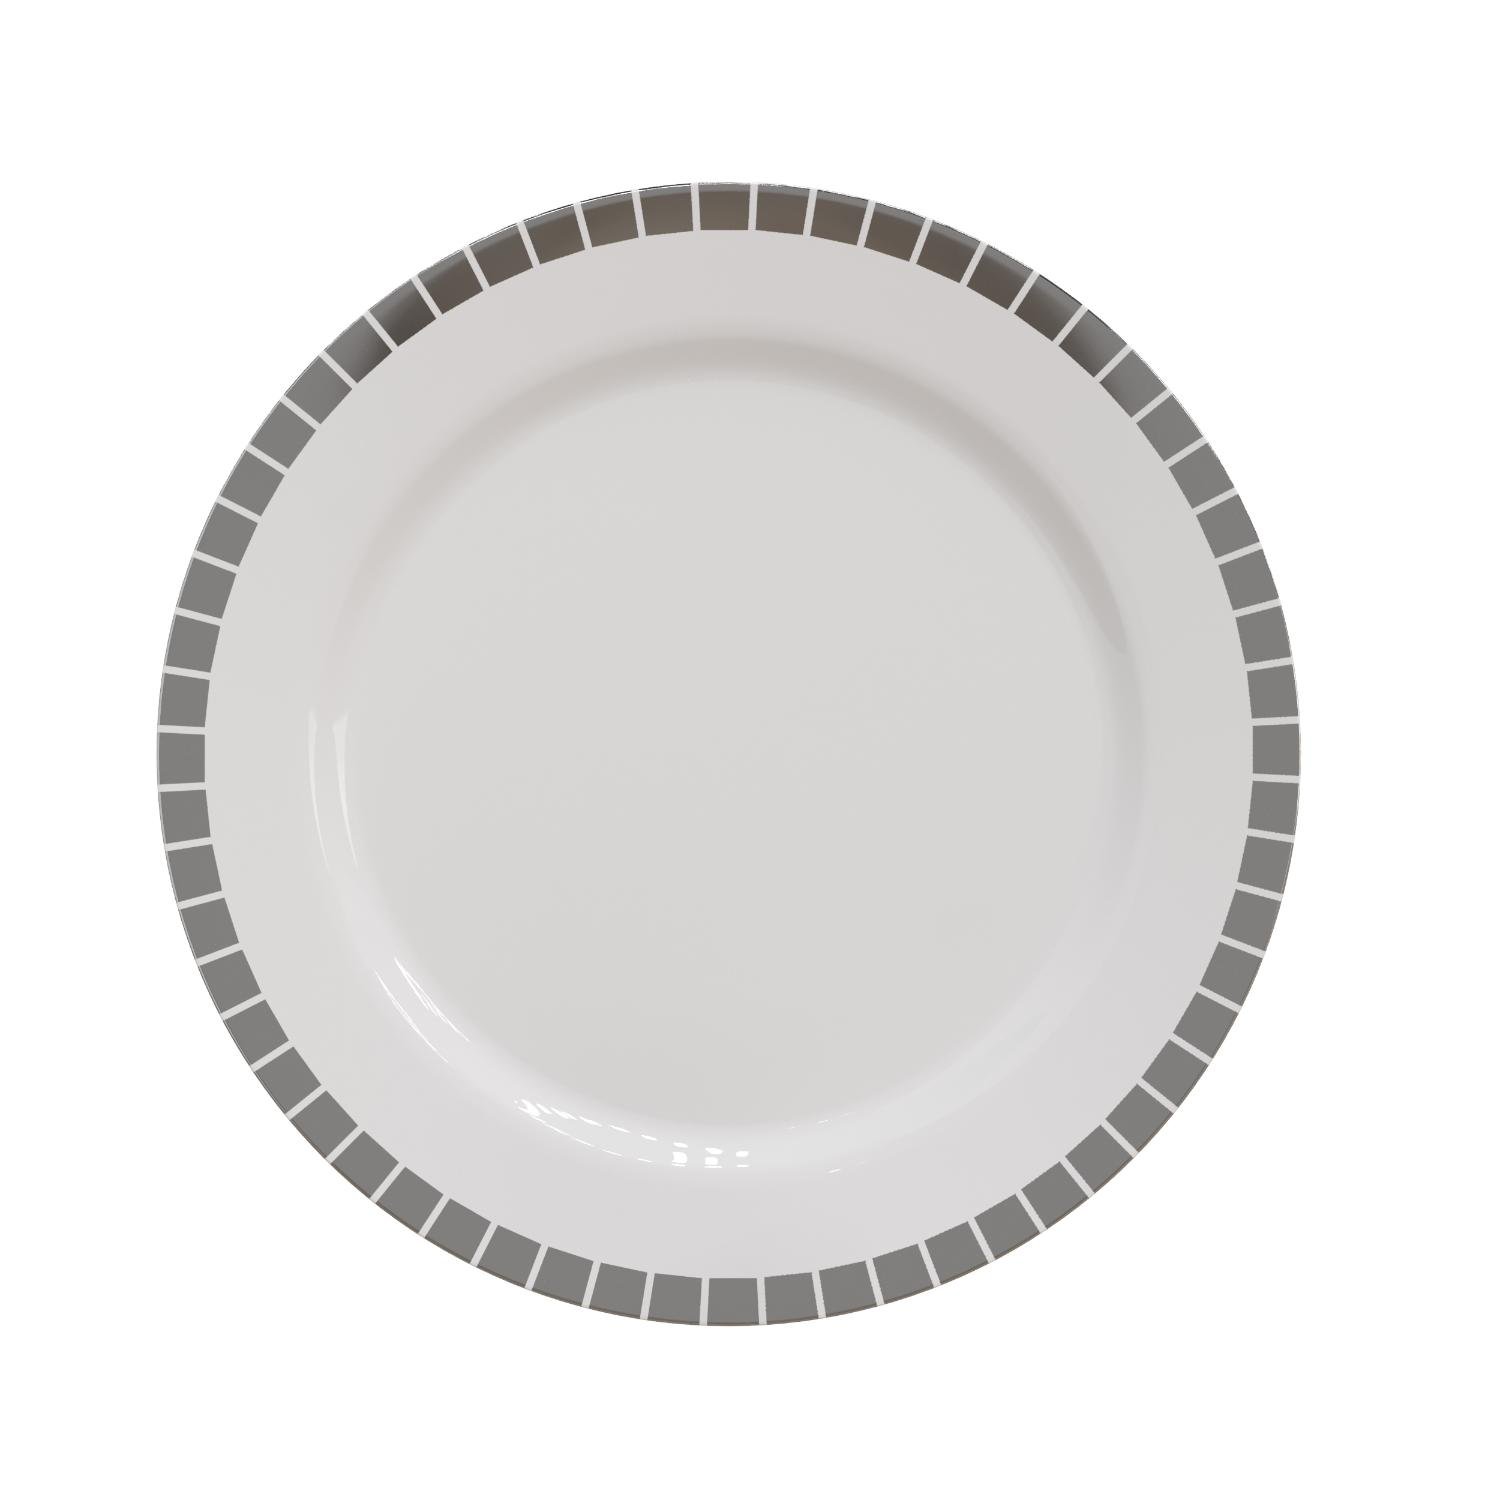 10.25 In. White/Silver Slit Design Plates - 10 Ct.